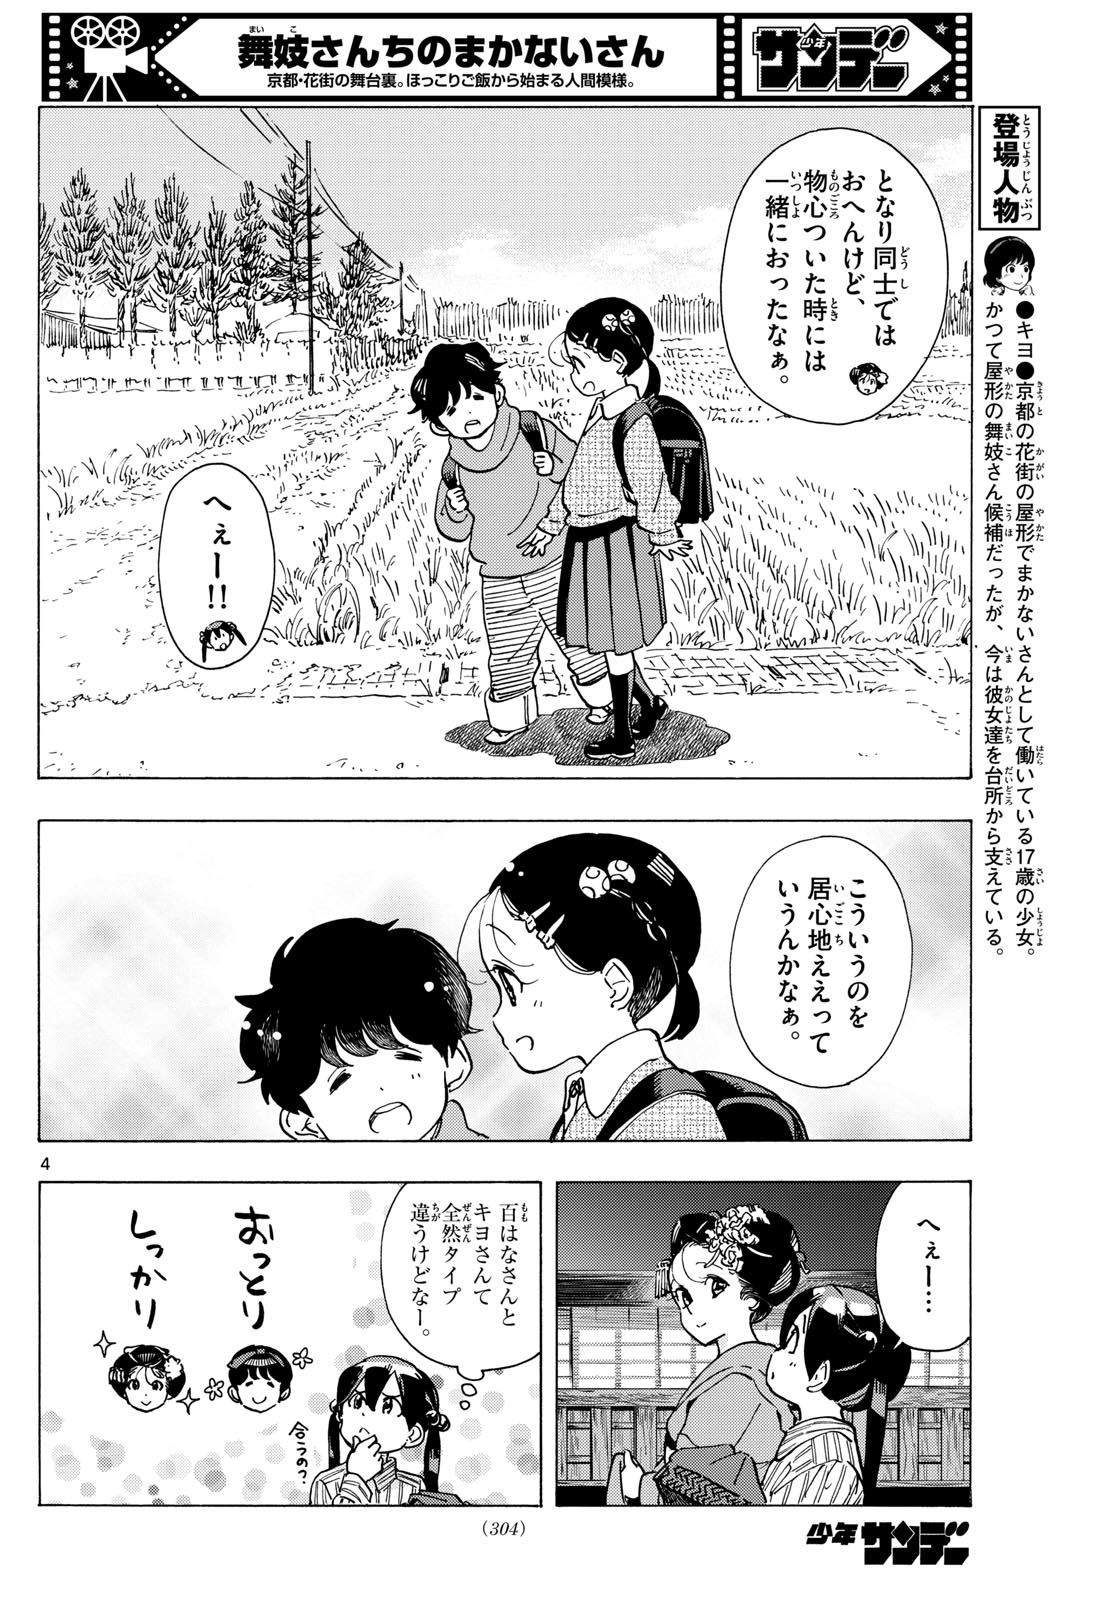 Maiko-san Chi no Makanai-san - Chapter 290 - Page 4